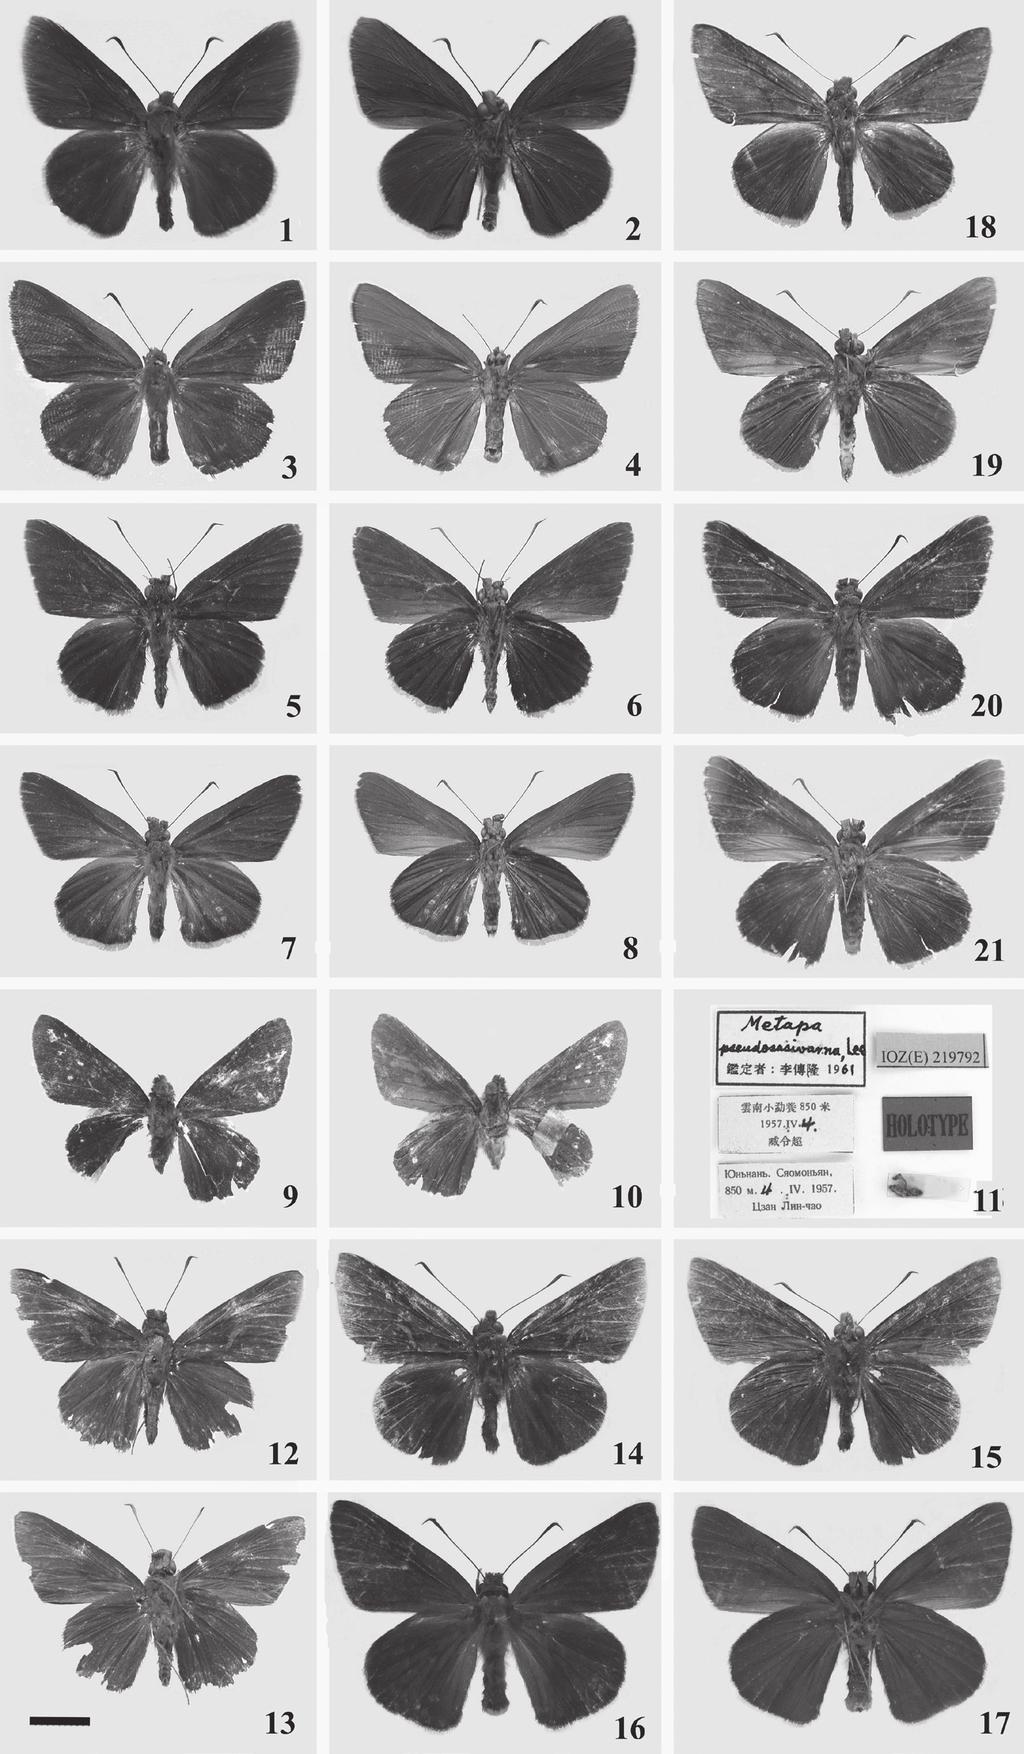 Fan et al.: Hesperiid Genus Matapa in China 1259 Figs. 1-21. Adults of genus Matapa species: 1-4. M. aria (Guangdong), male (1-2), female (3-4); 5-8. M. sasivarna (Hainan), male (5-6), female (7-8); 9-11.